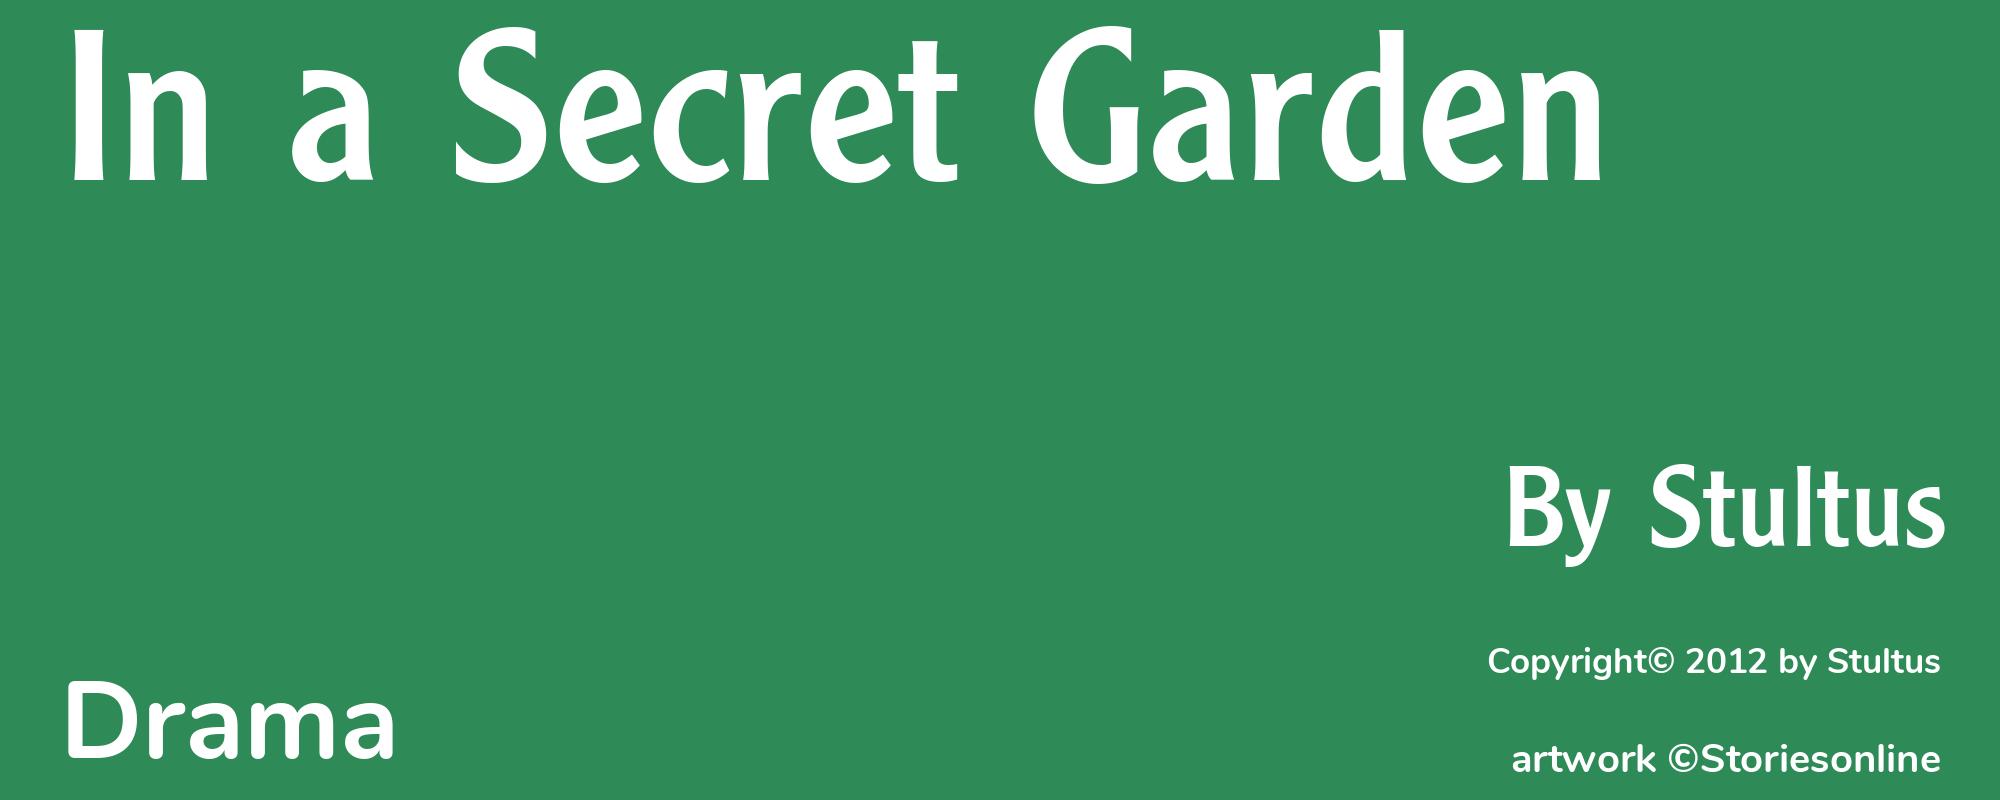 In a Secret Garden - Cover